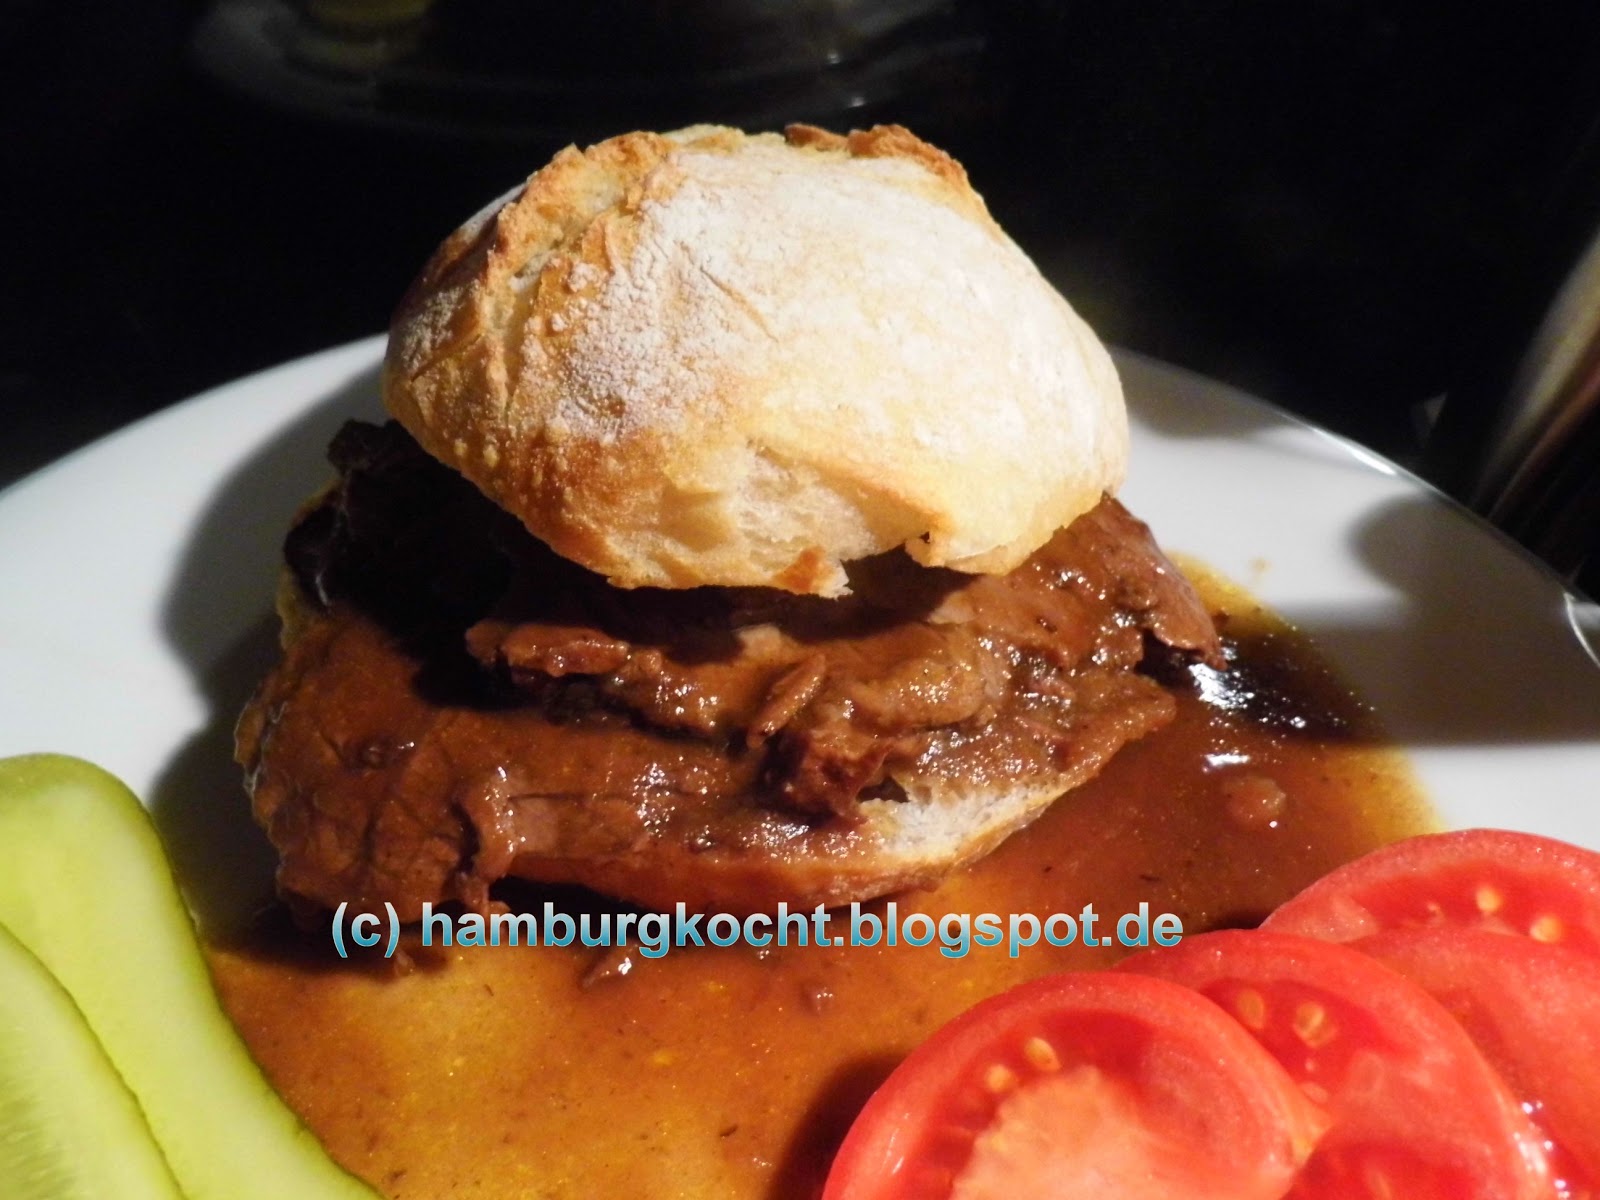 Hamburg kocht!: Hamburger Original und original Hamburger: Rundstück warm